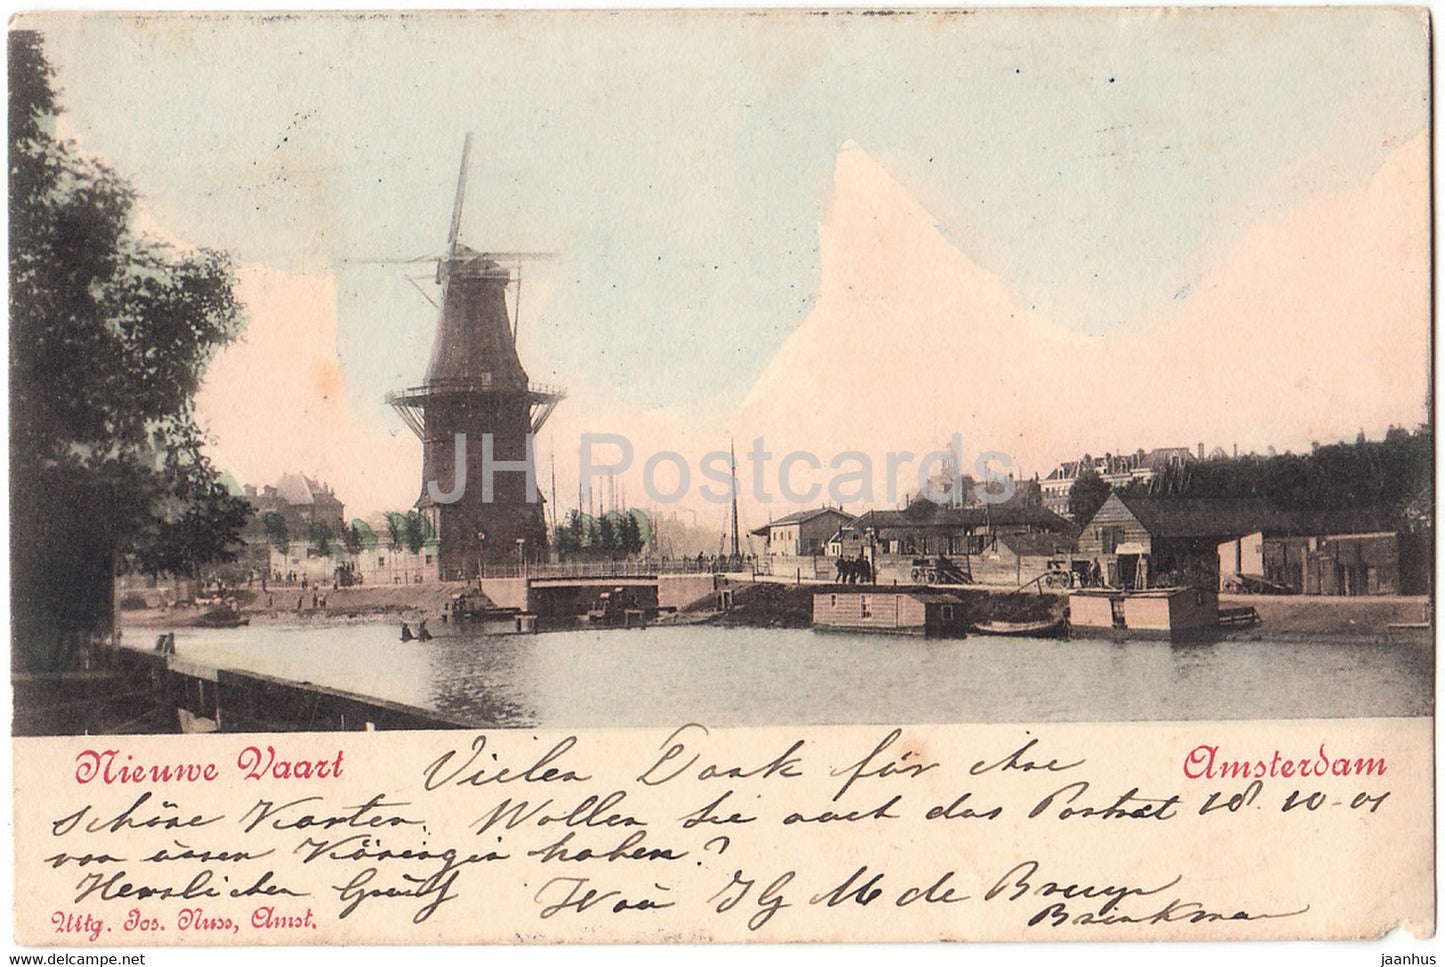 Amsterdam - Nieuwe Vaart - windmill - old postcard - 1901 - Netherlands - used - JH Postcards